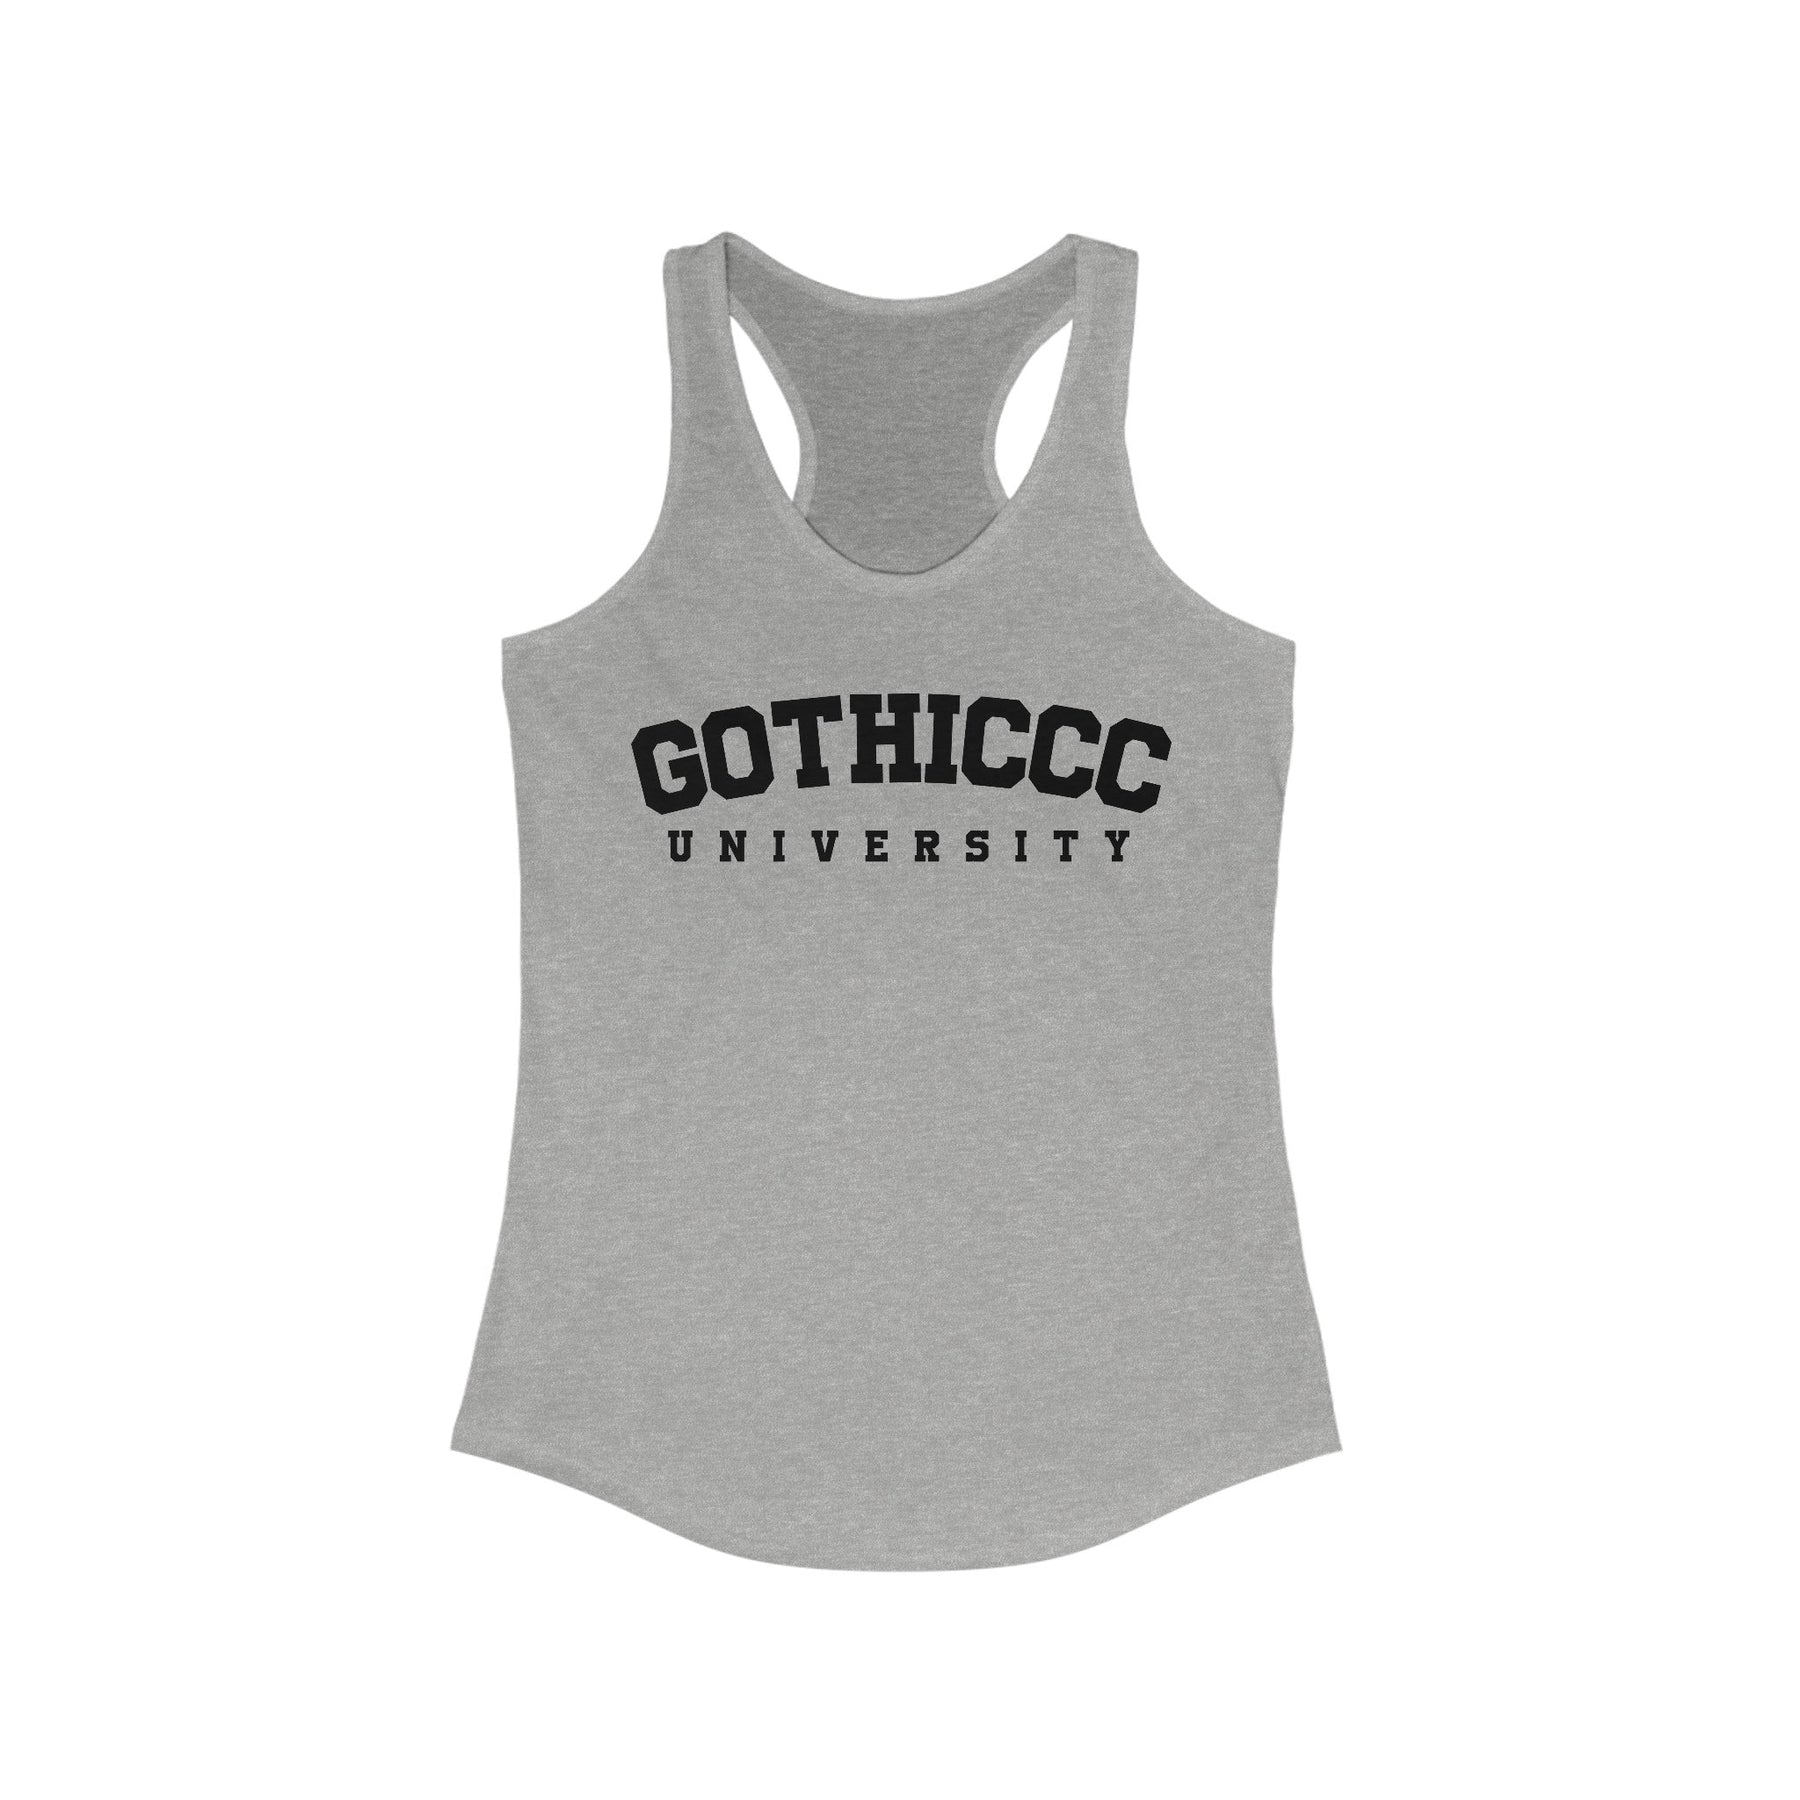 Gothiccc University Women's Racerback Tank - Goth Cloth Co.Tank Top17411958312812136695